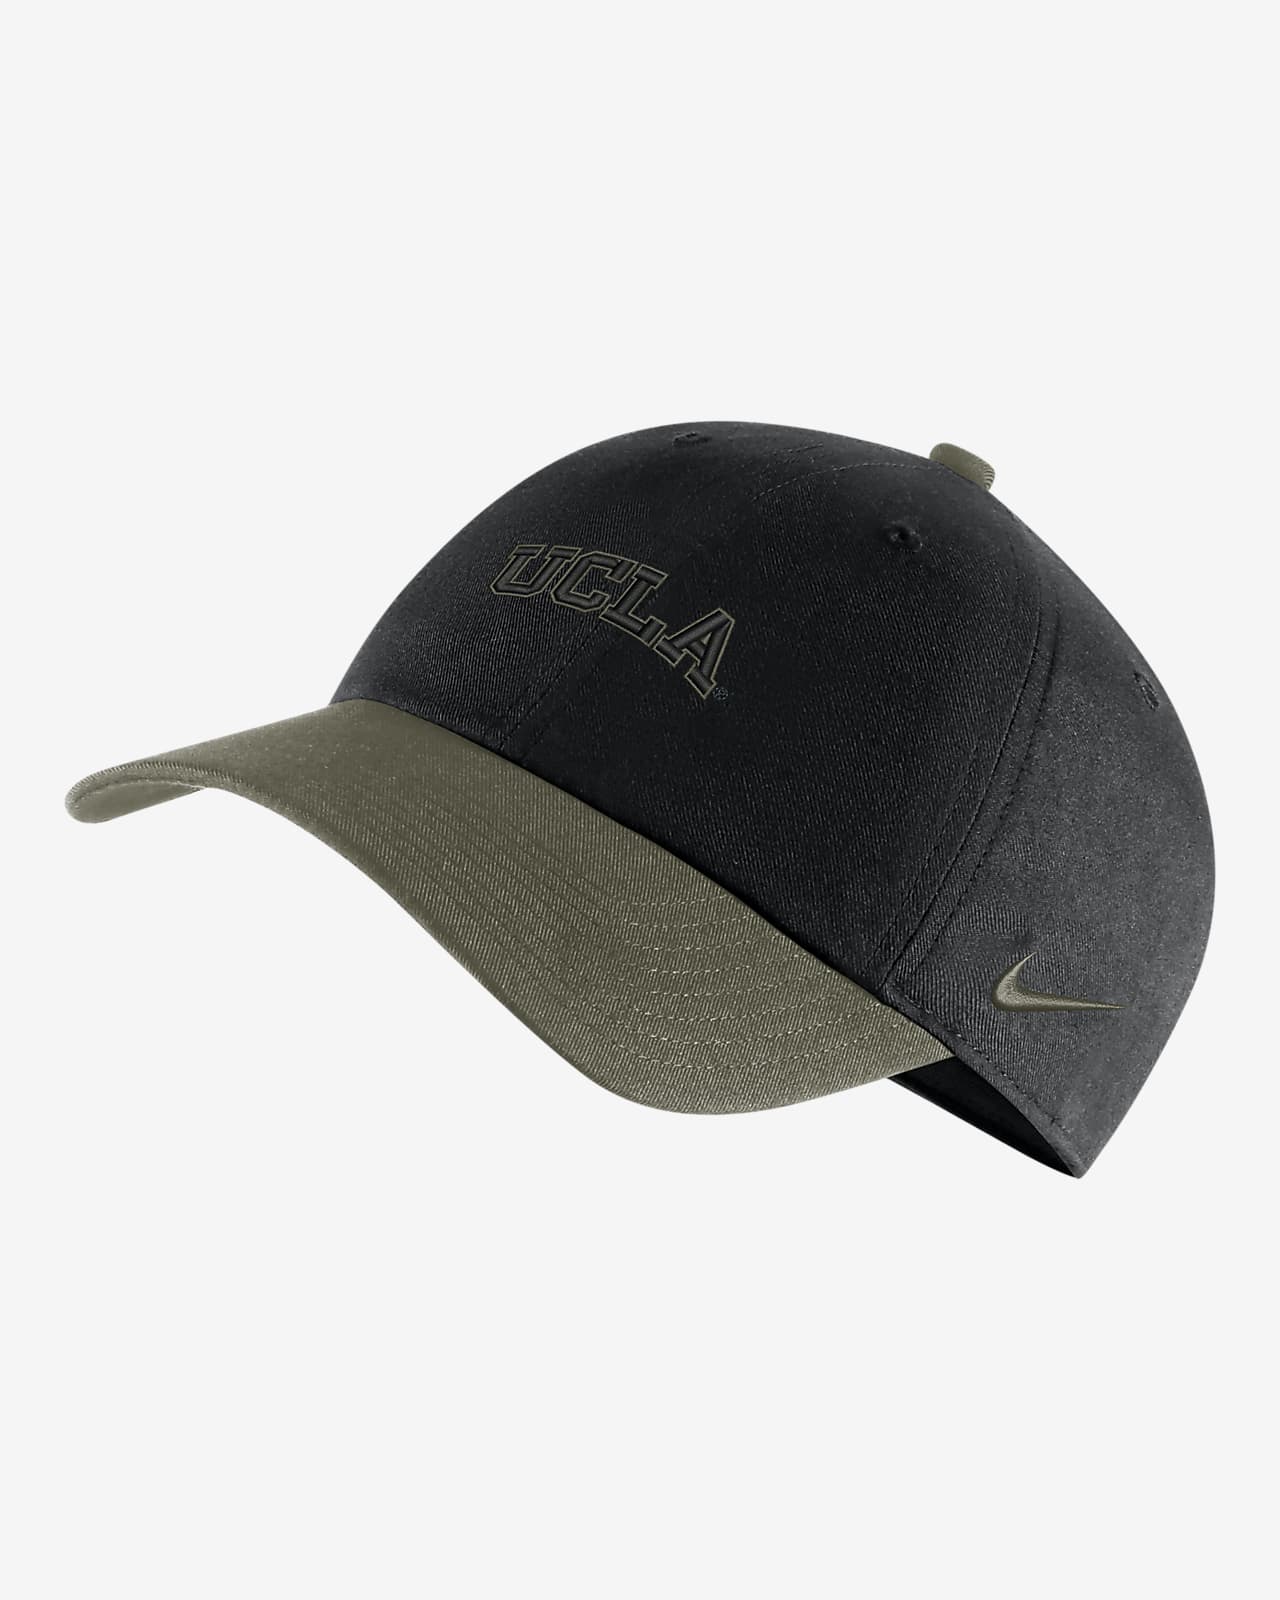 UCLA Heritage86 Nike College Hat